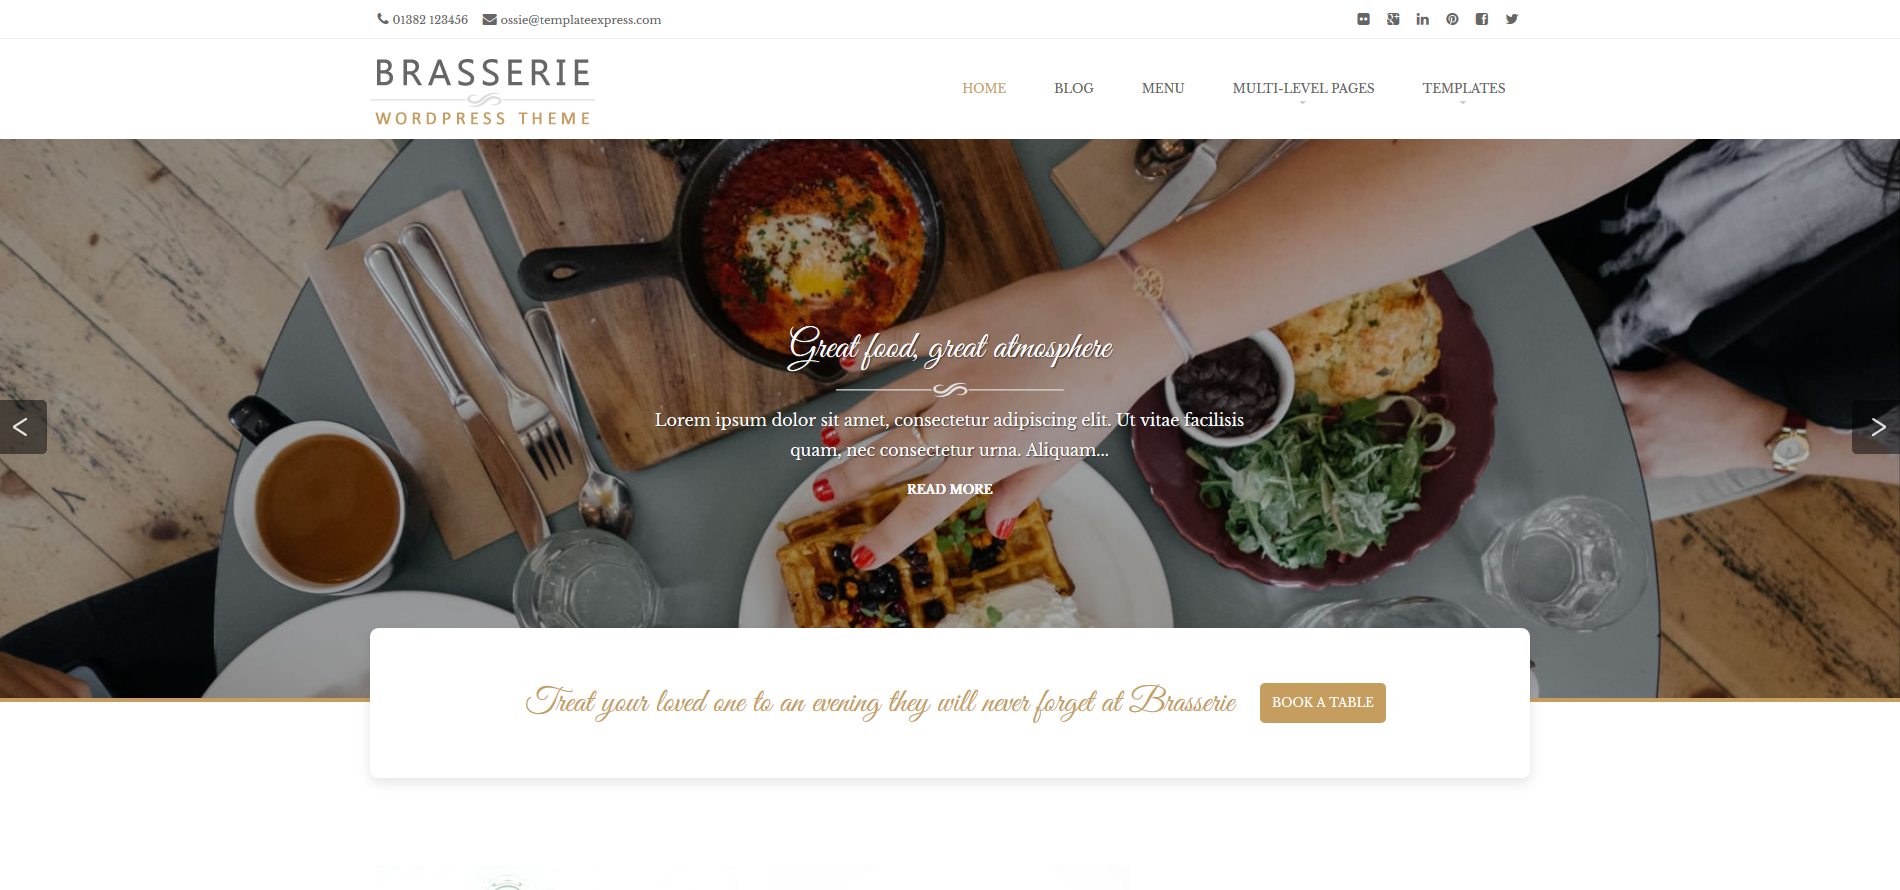 WordPress Theme Brasserie